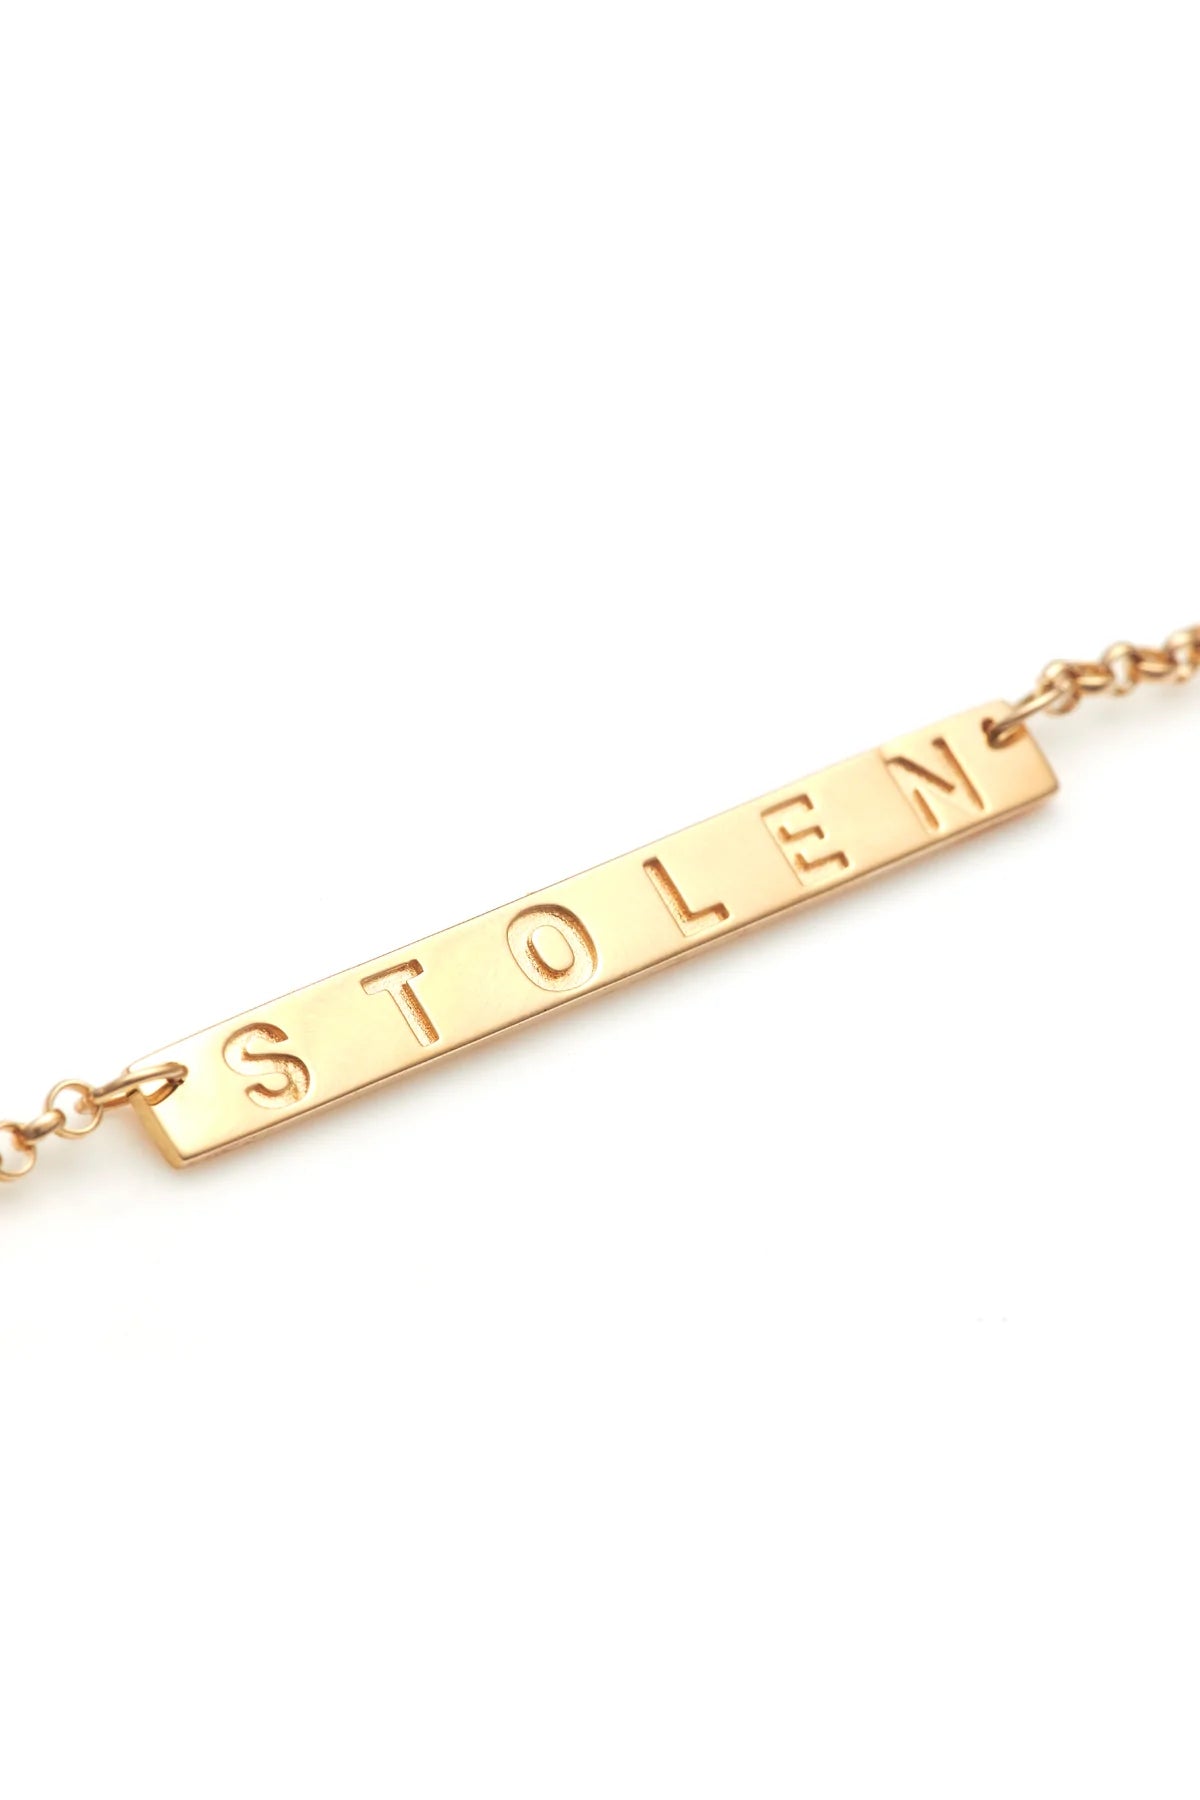 Stolen Girlfriends Club Stolen Plank Necklace - Gold 18k Plated